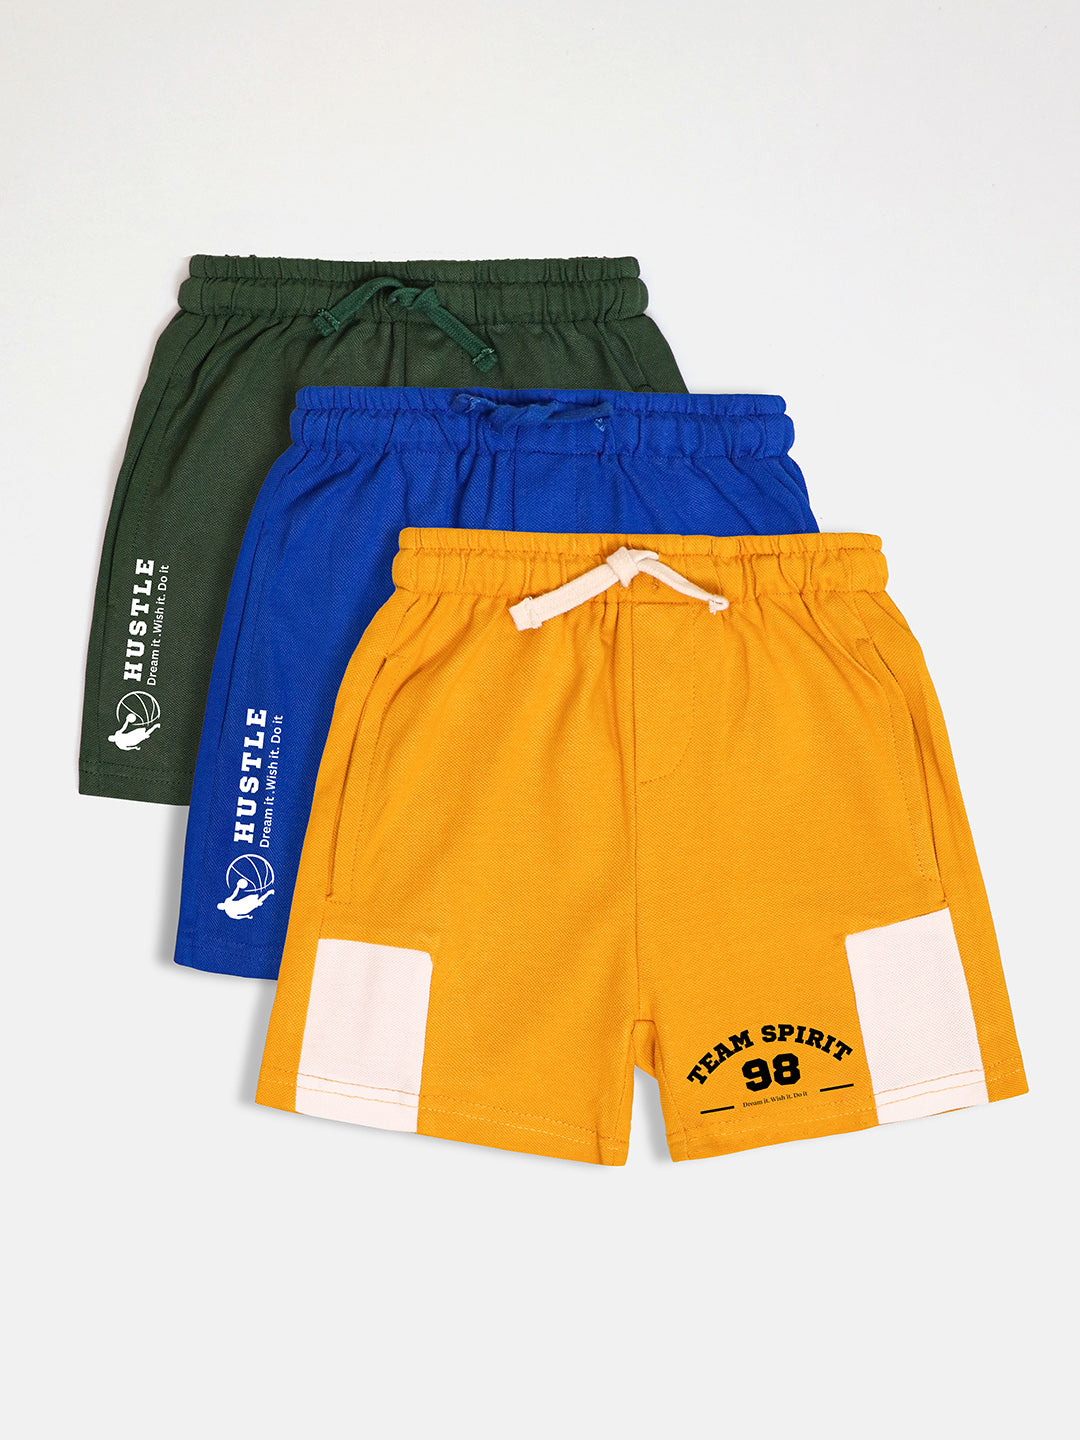 Boys Cotton Shorts Combo- Blue, Yellow, Green